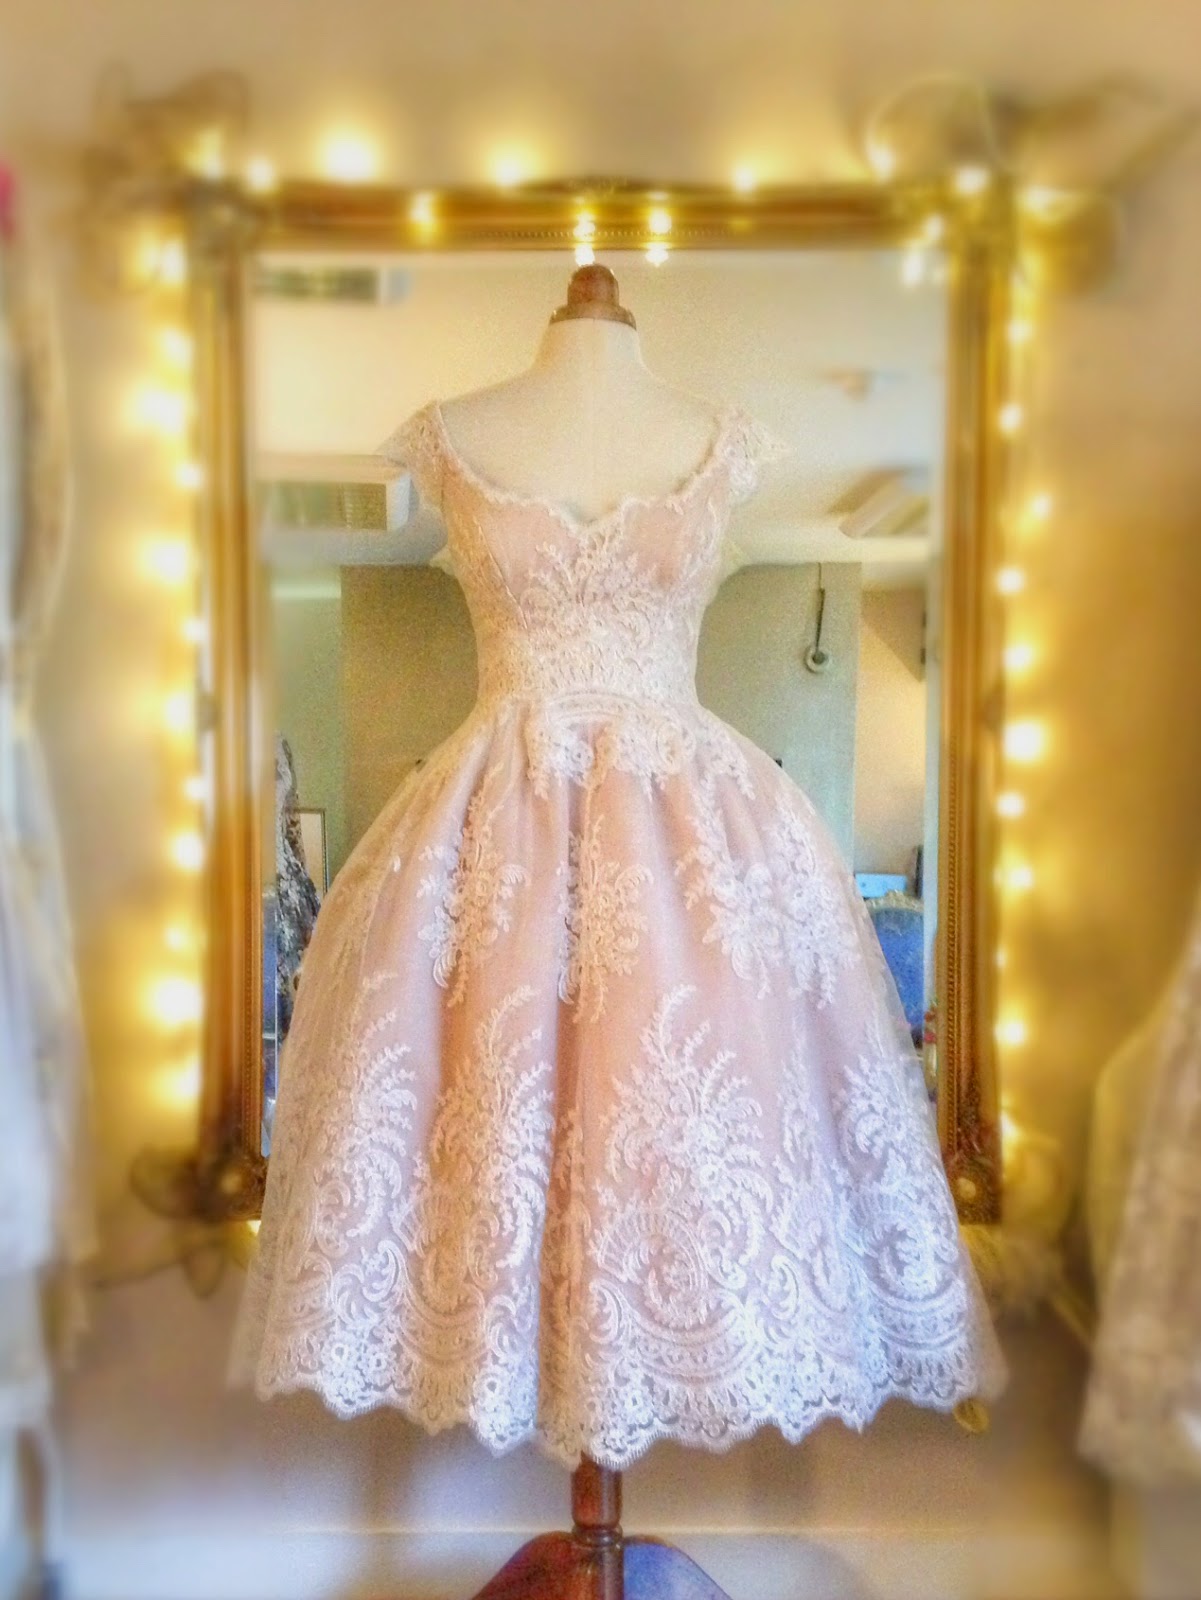 Blush Lace Tea Length Wedding Dress from Joanne Fleming Design